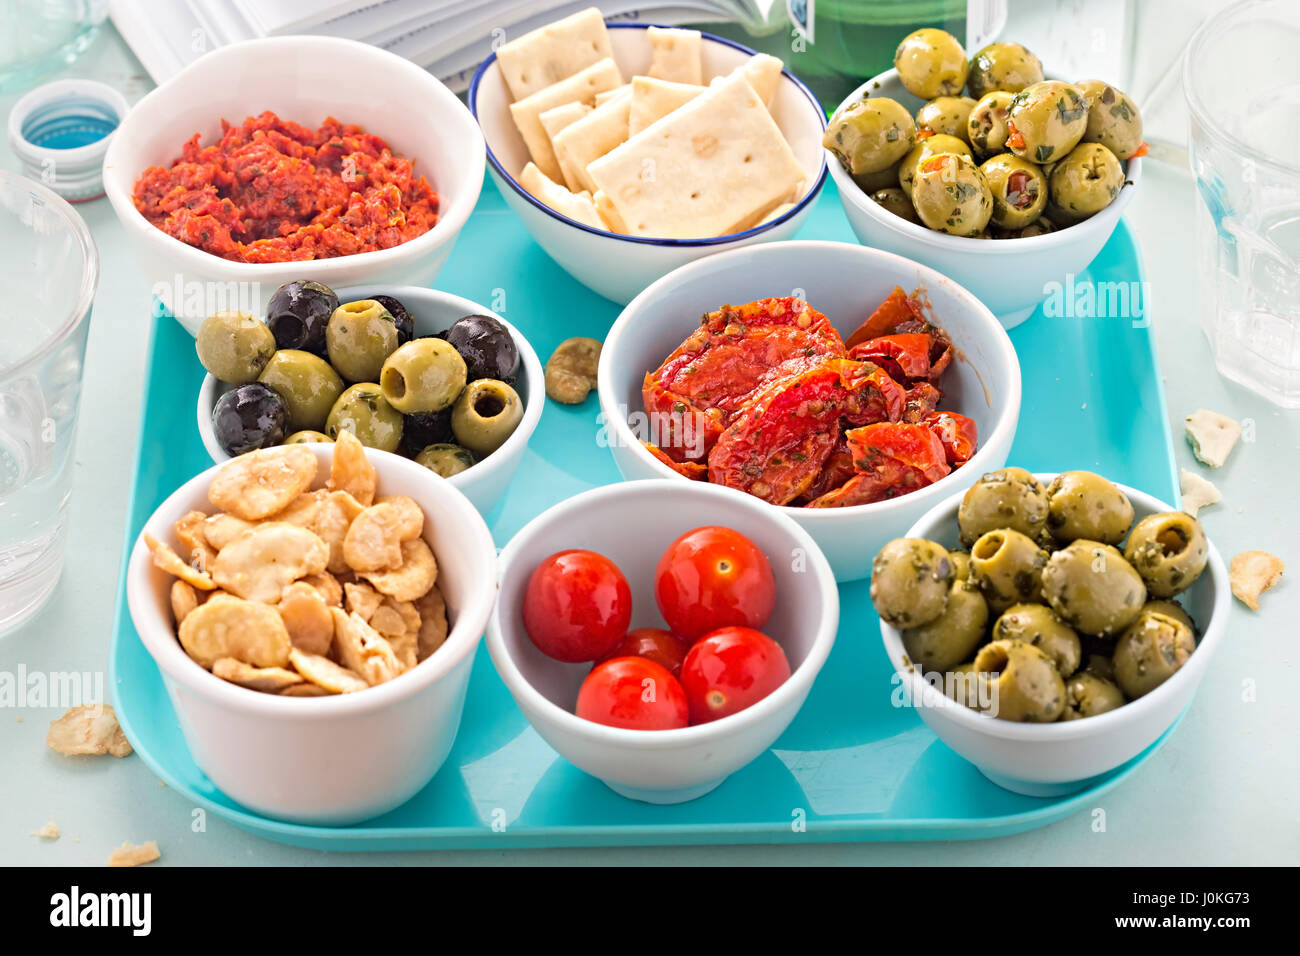 Spanish tapas on blue tray - red pesto, olives, cherry tomatoes, red pesto,  crackers Stock Photo - Alamy